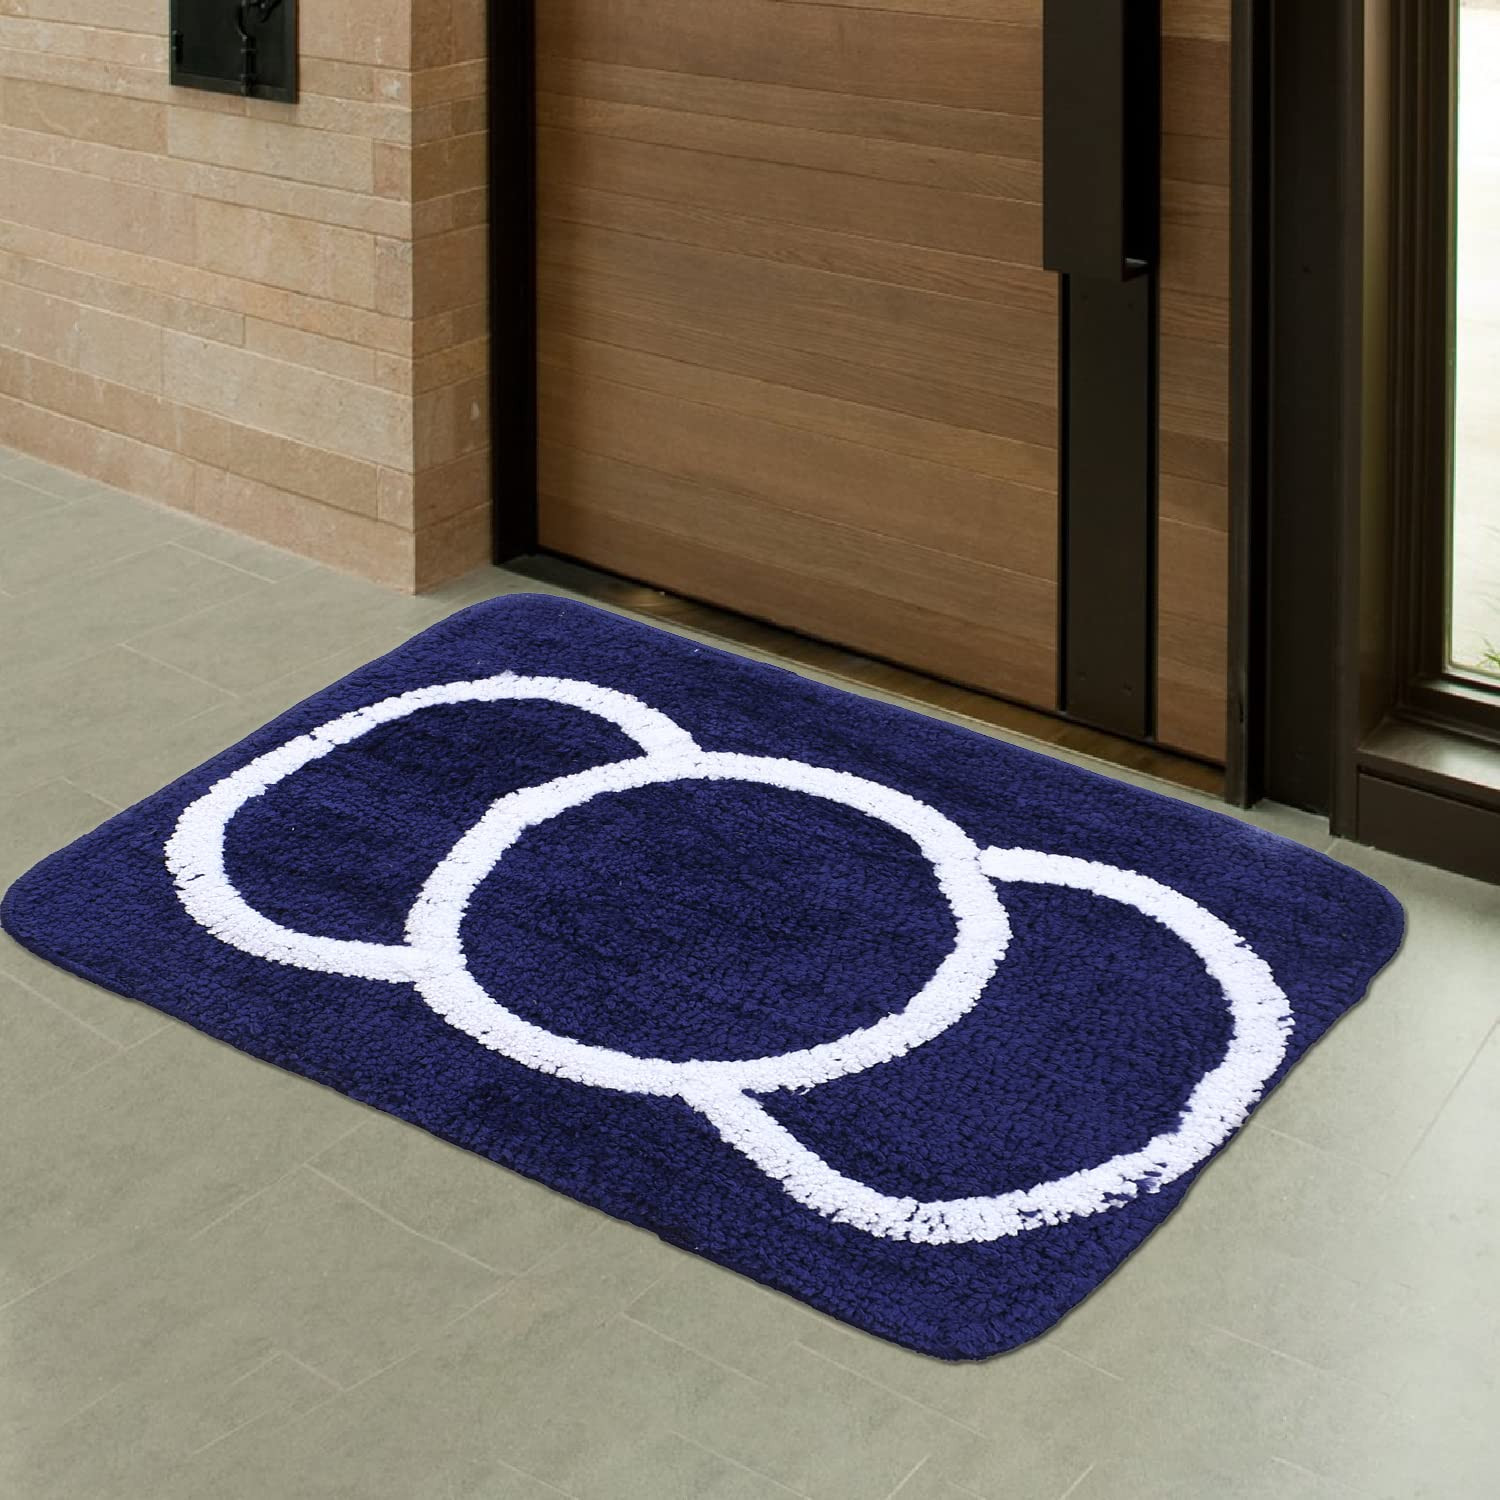 Kuber Industries Super Soft Door mat|Microfiber Anti-Slip Water Absorbant Fluffy Floor Mat|Circular Pattern Entrance Mat for Kitchen,Bedside,Door,Living Room,60x40 cm,Pack of 2 (Blue & Gray)